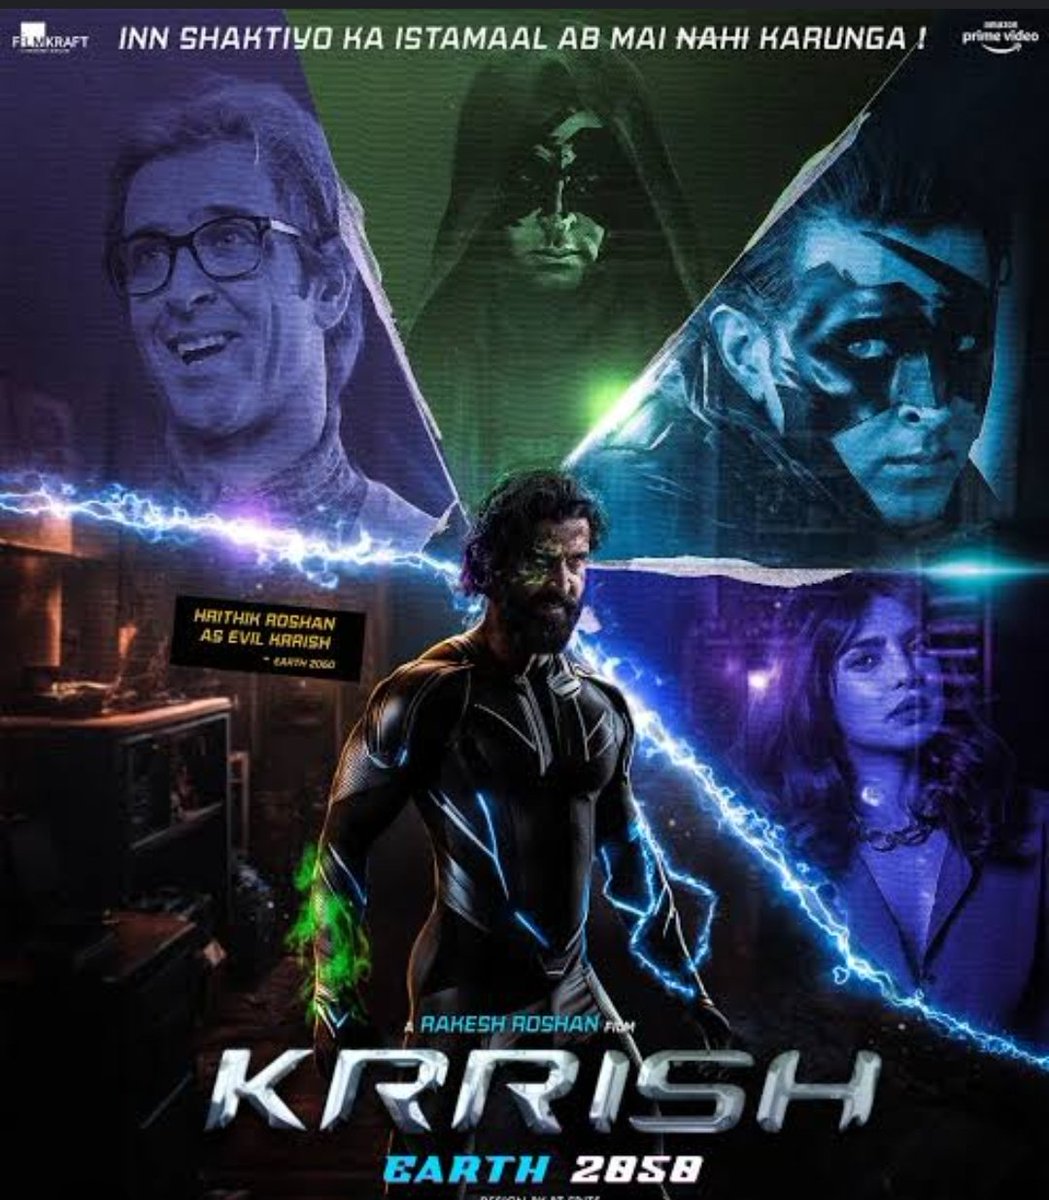 COUNTDOWN BEGINS NOW....
#Krrish4  COMING SOON 💥💥💥💥

#HrithikRoshan #SiddharthAnand